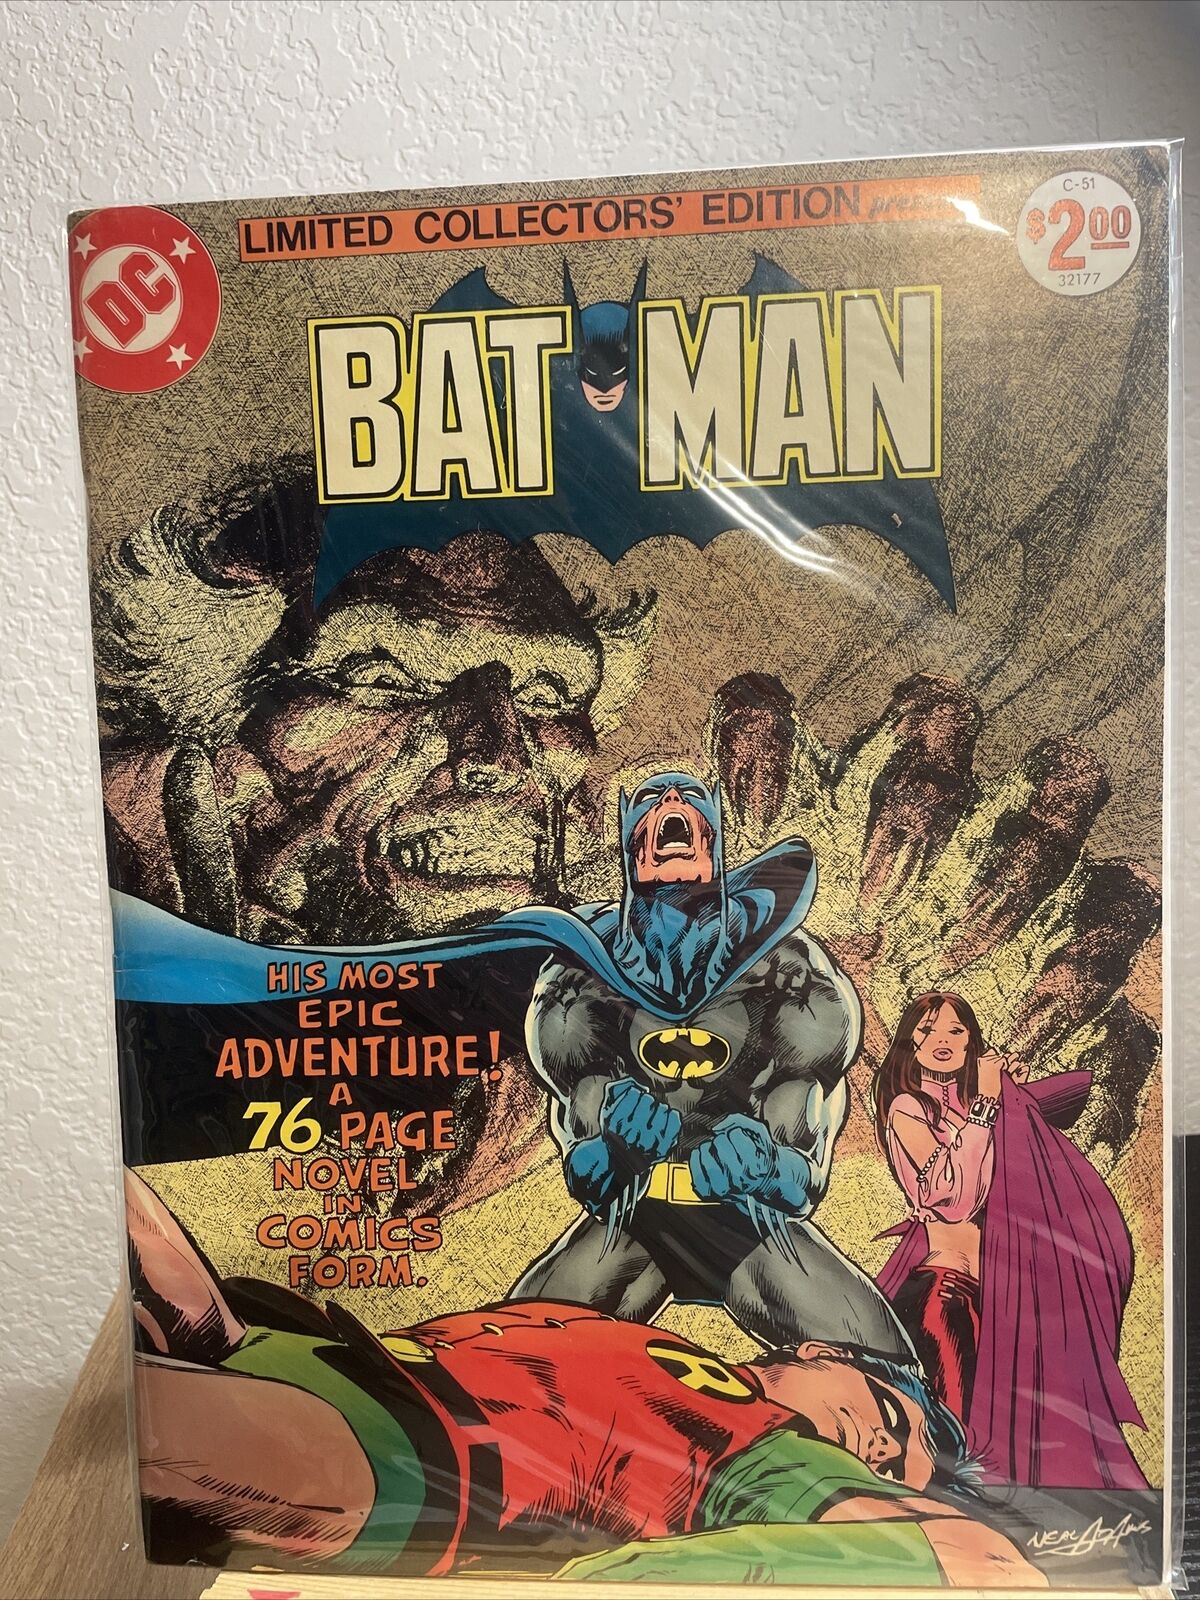 1977 BATMAN C-51 Neal Adams DC Comics Treasury Limited Collectors Edition Book